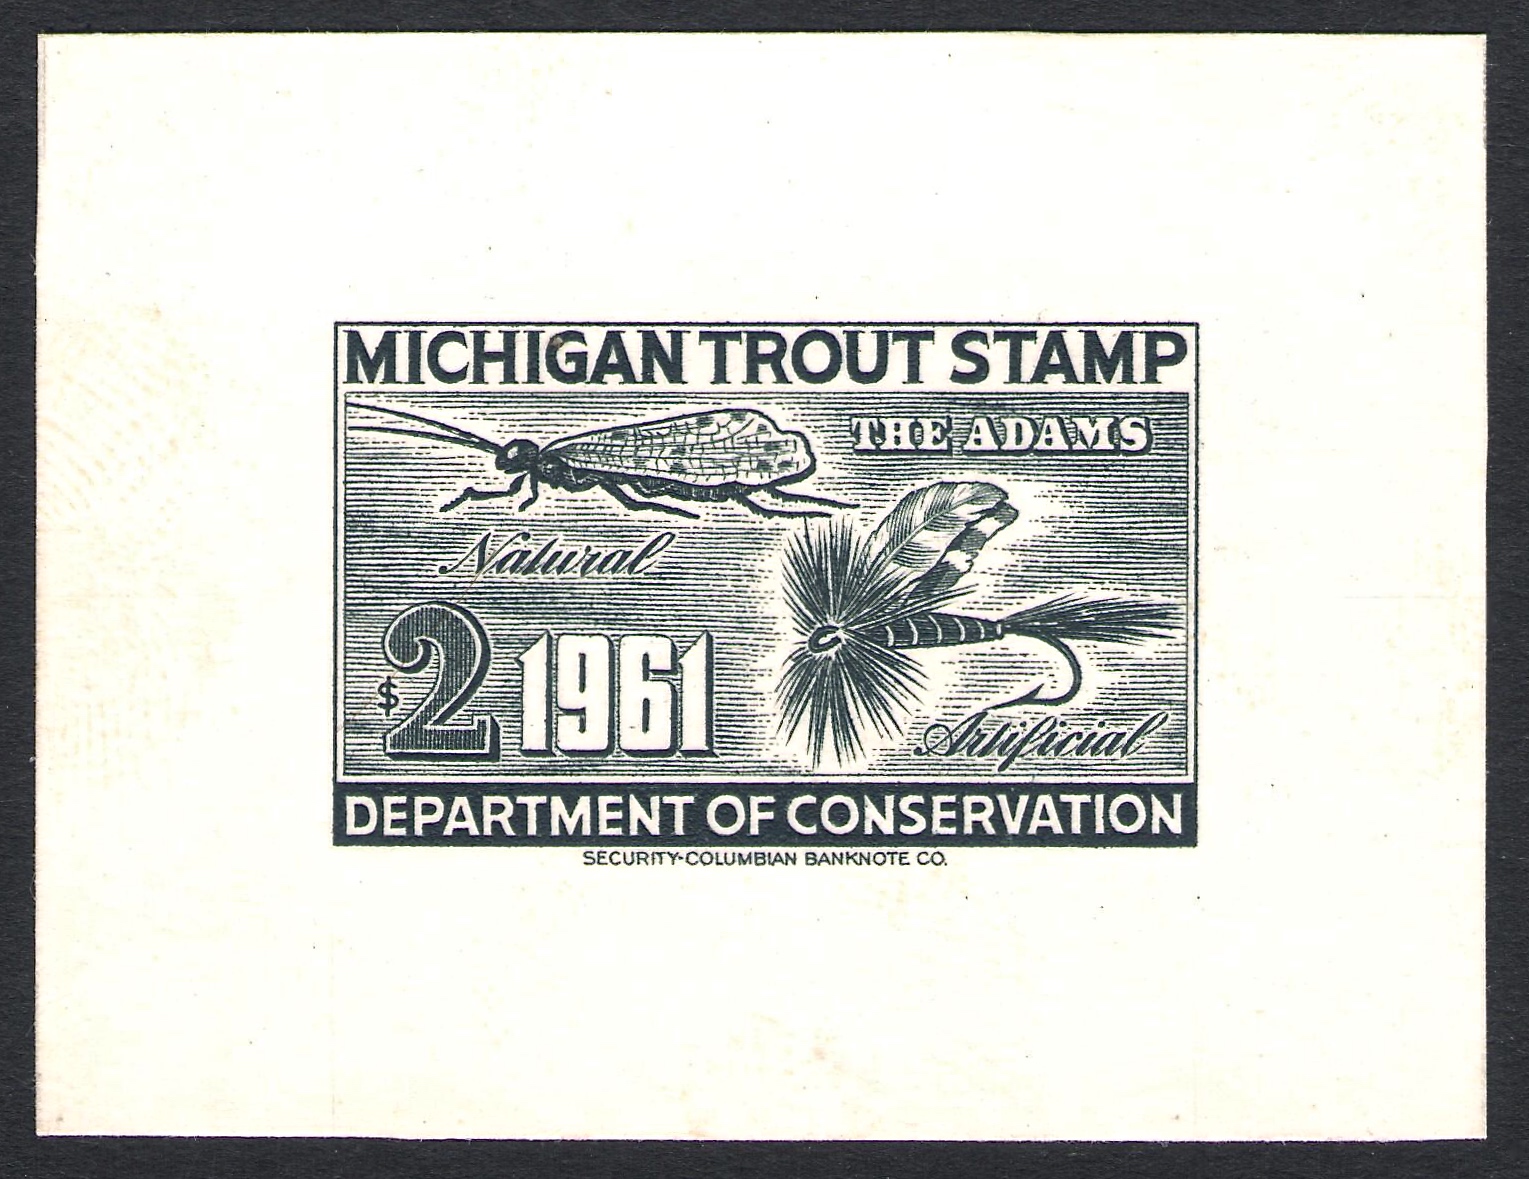 1961 Enlargement Large Die Proof Michigan trout